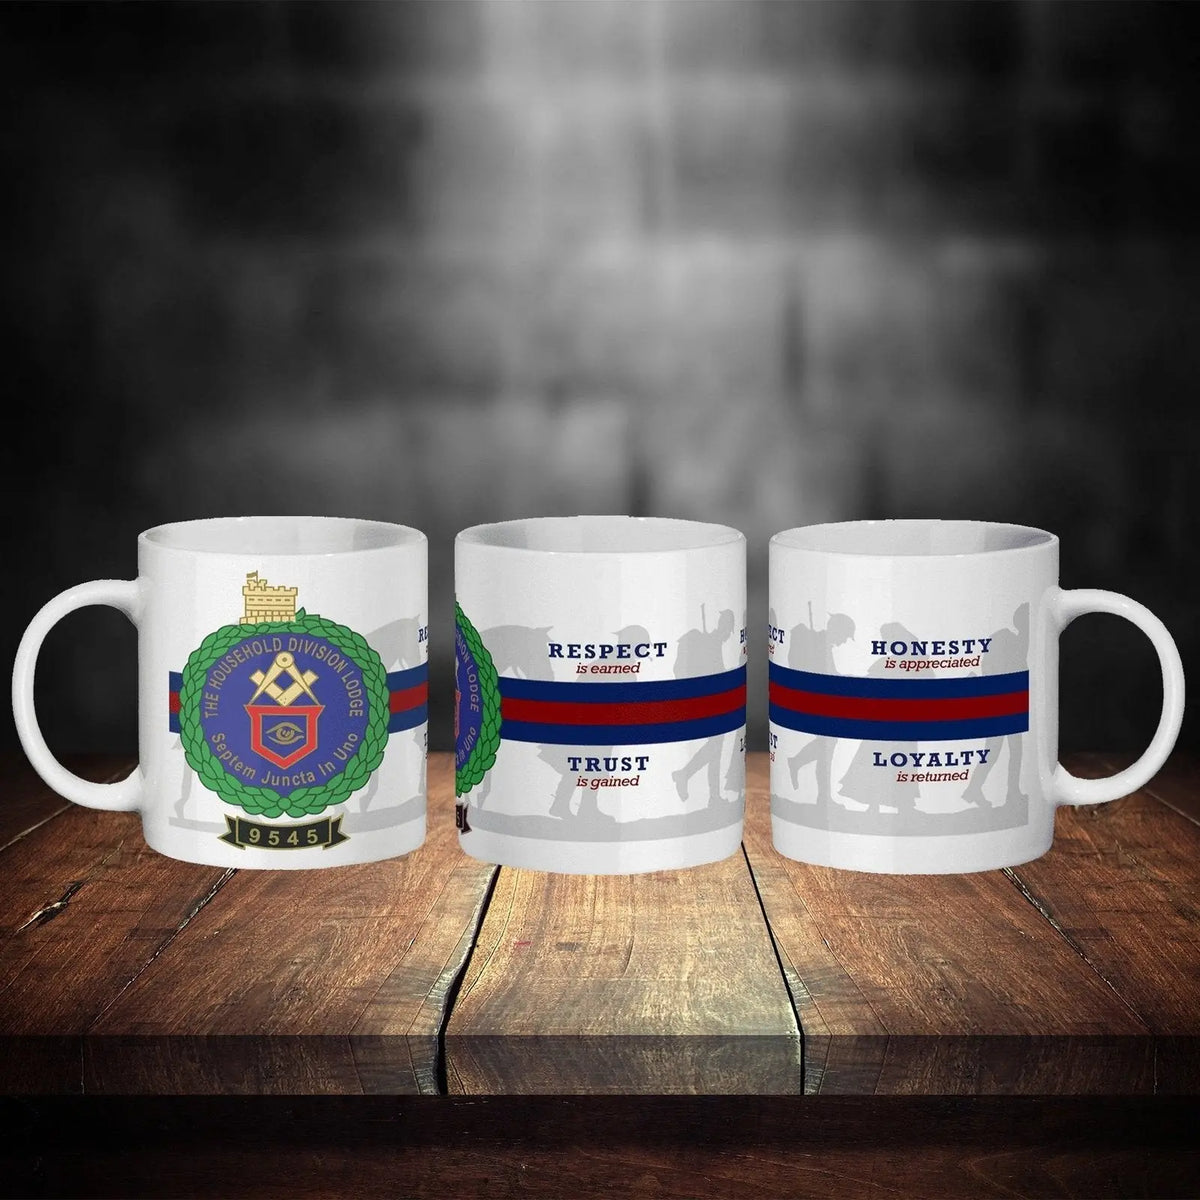 Household Division Lodge 9545 Respect Mug